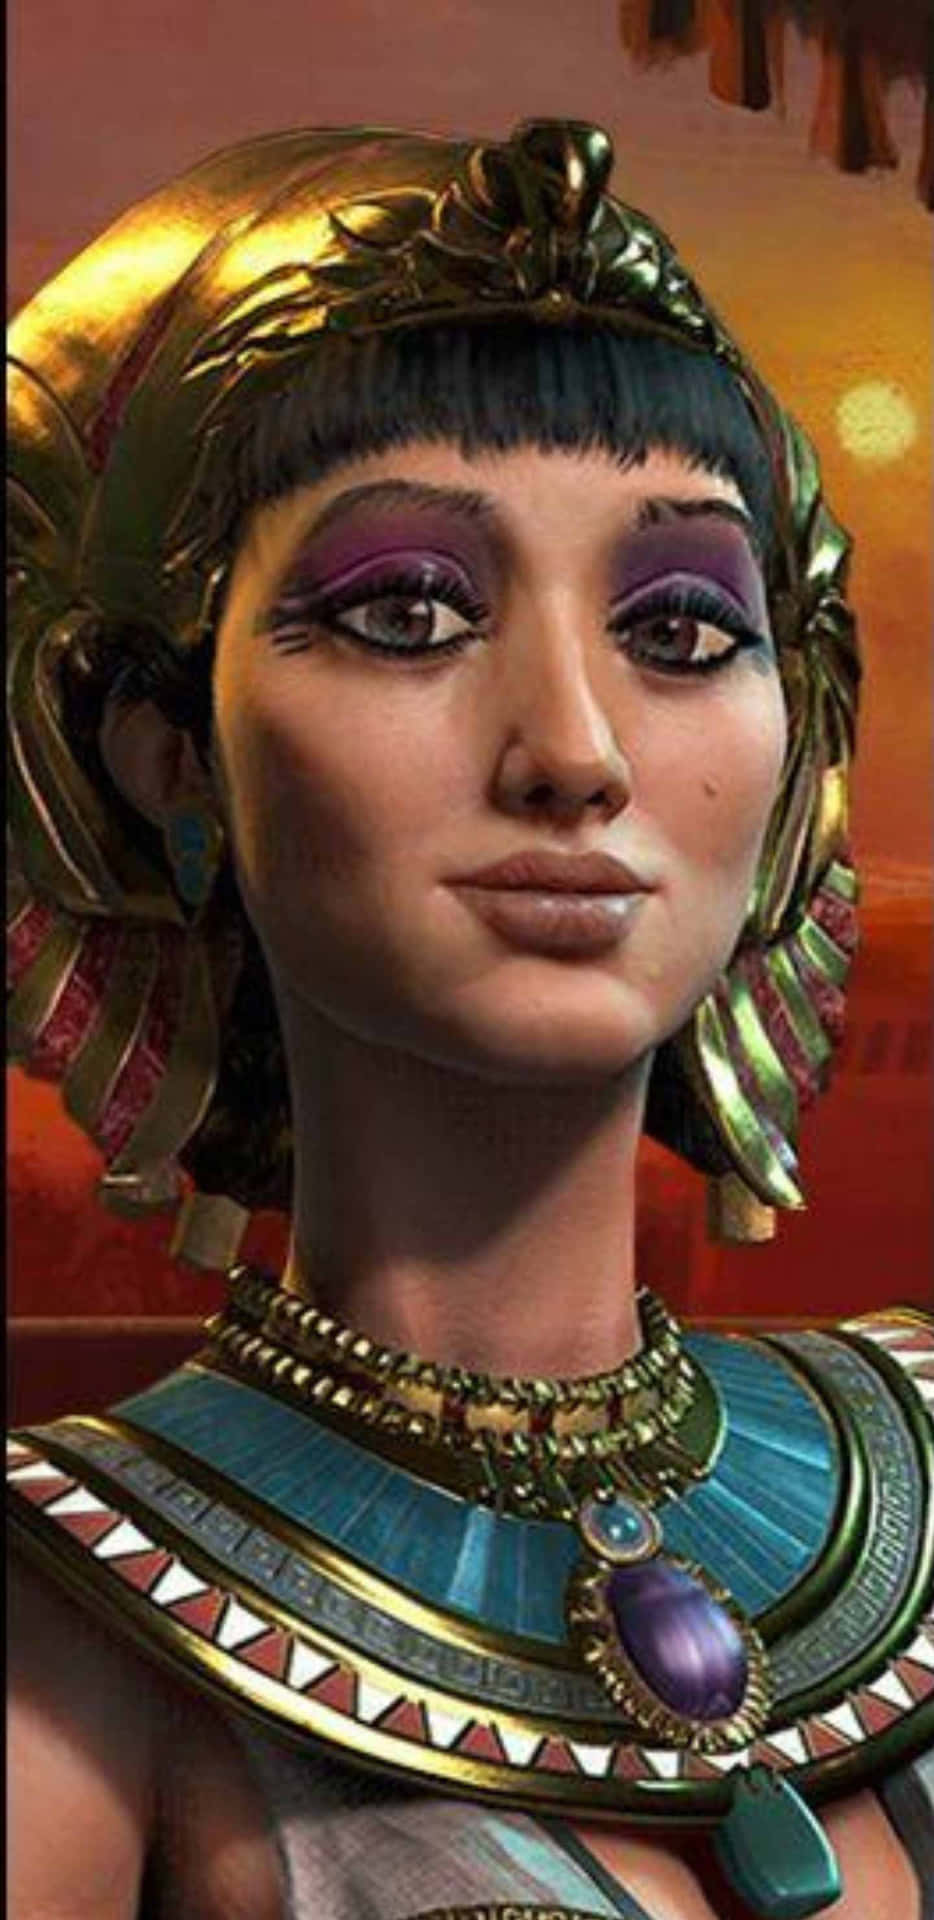 Enkvinna I En Egyptisk Dräkt